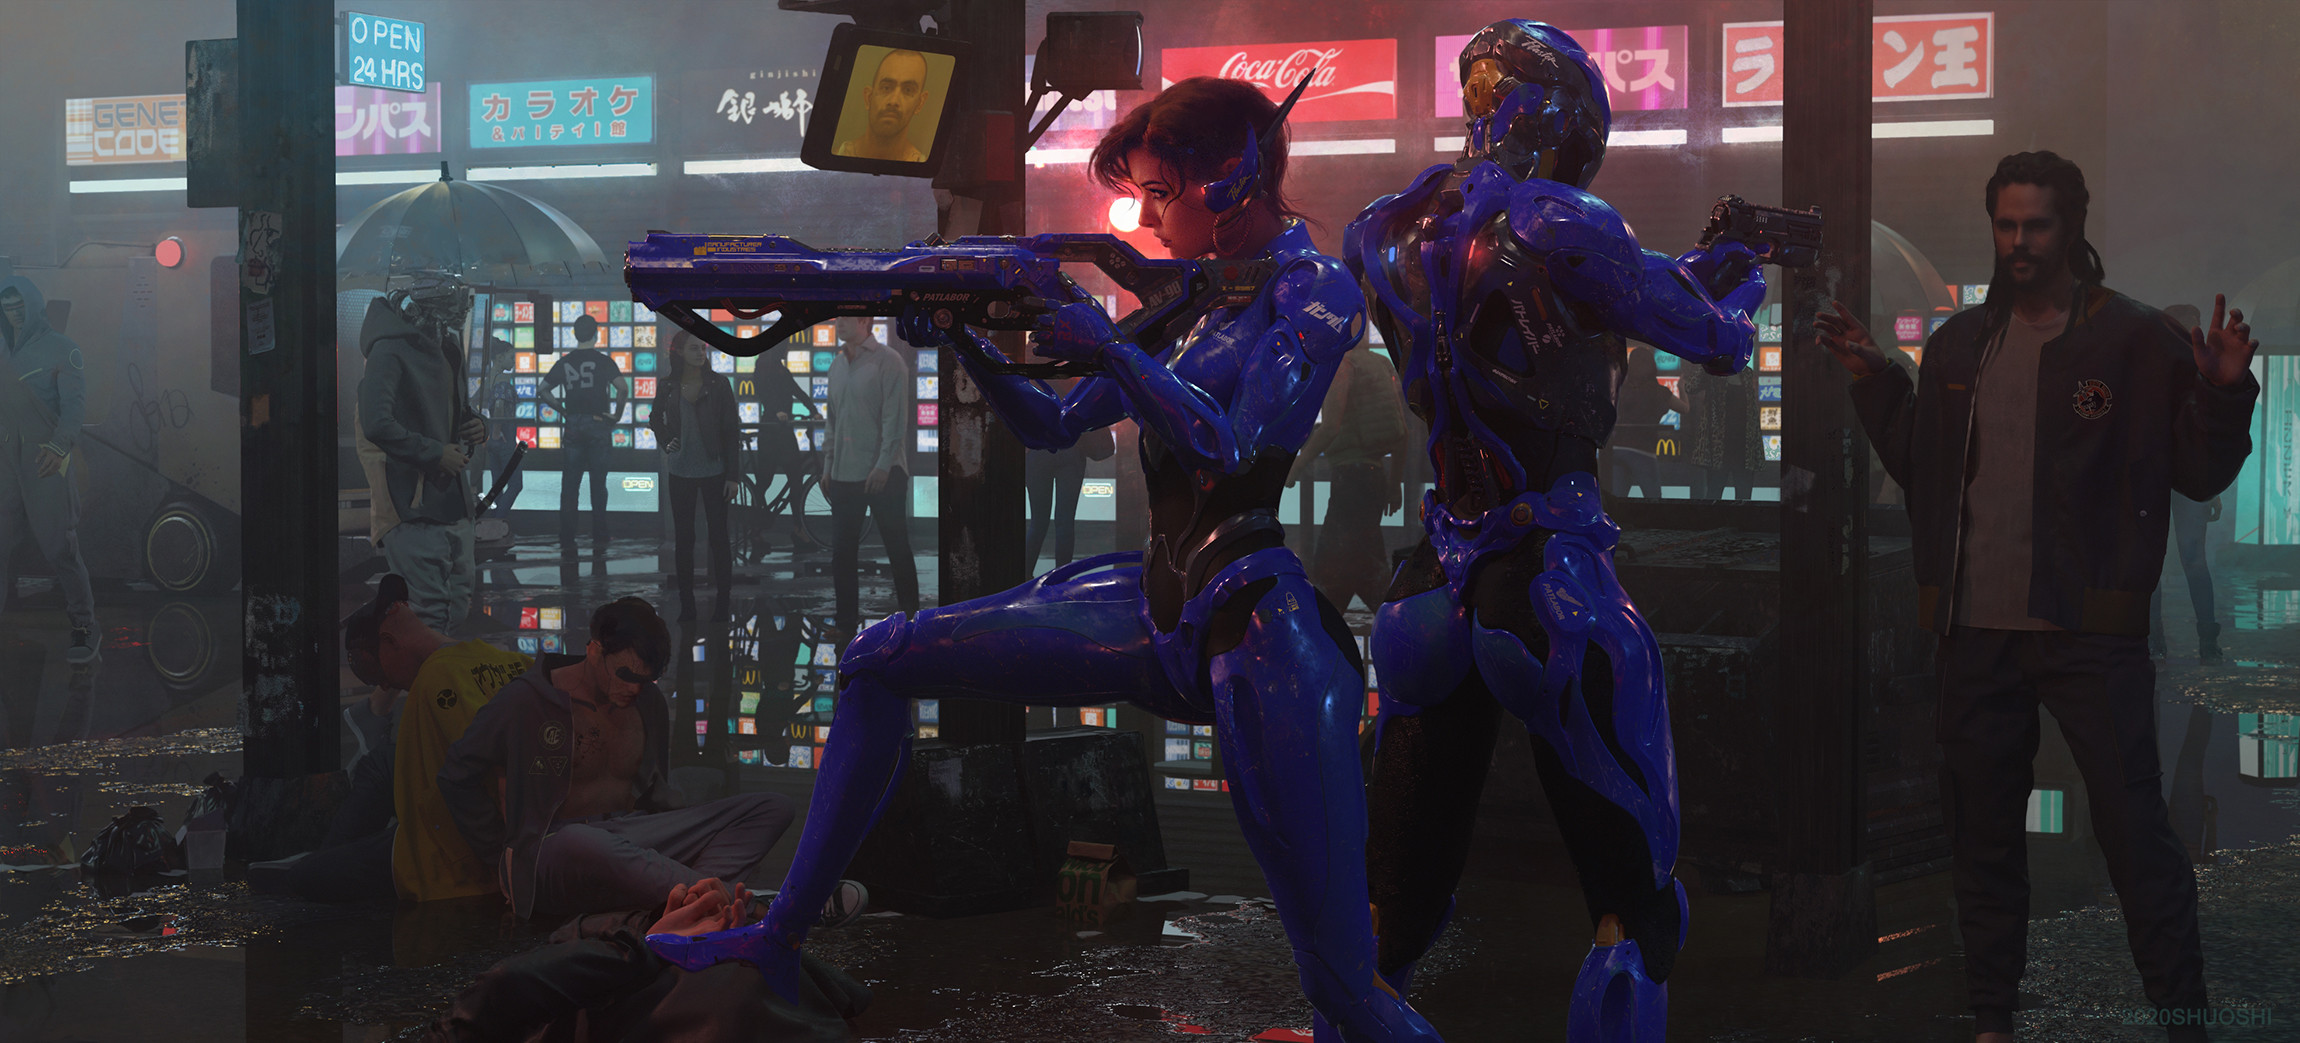 Science Fiction Futuristic Digital Art Girls With Guns Artwork Science Fiction Women Weapon Aiming S 2300x1043